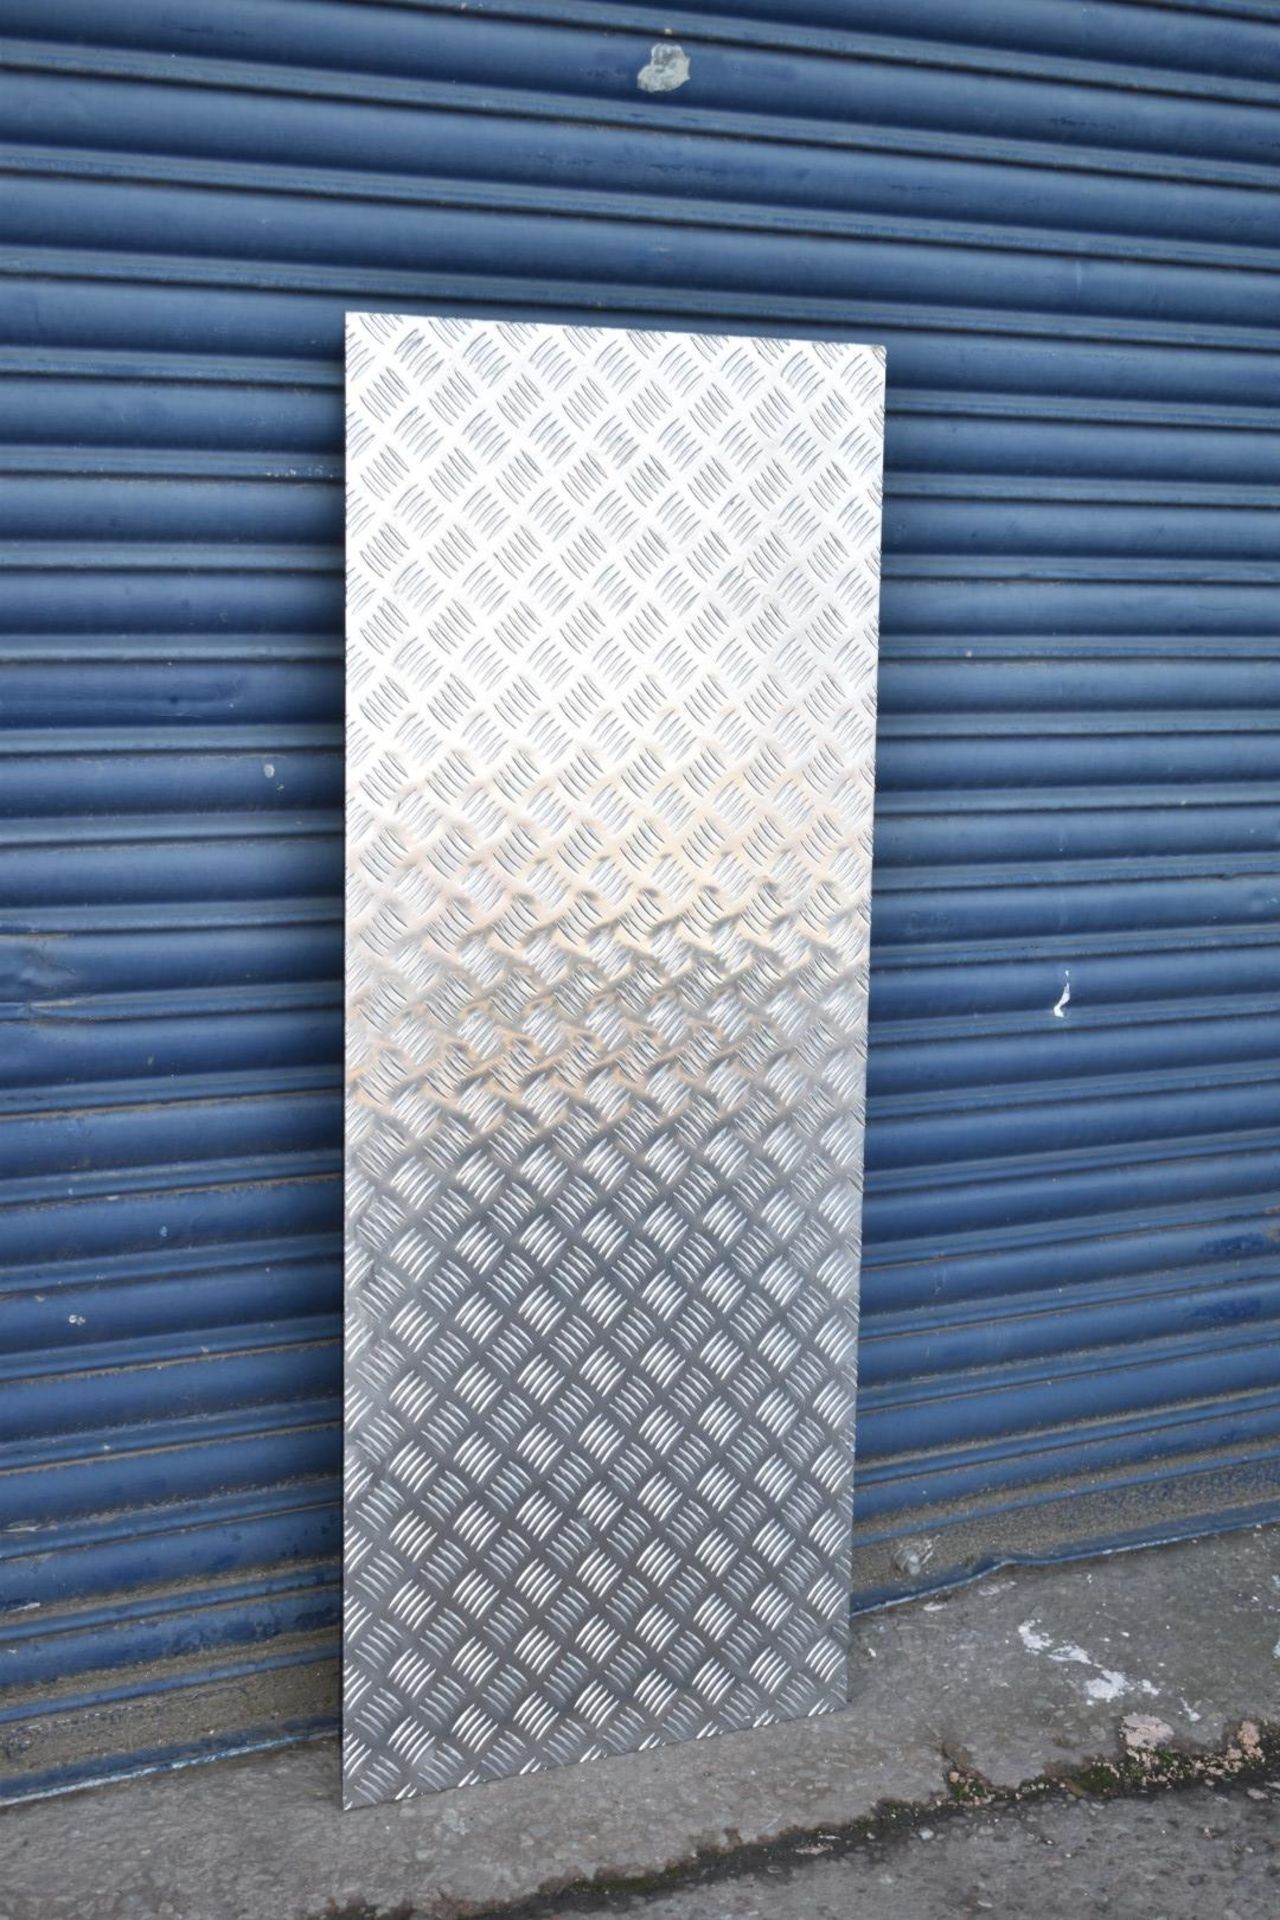 8 x Aluminium Tread Checker Plates - Size 125 x 50.5 x 0.3 cms - None Slip Floor Plate Suitable